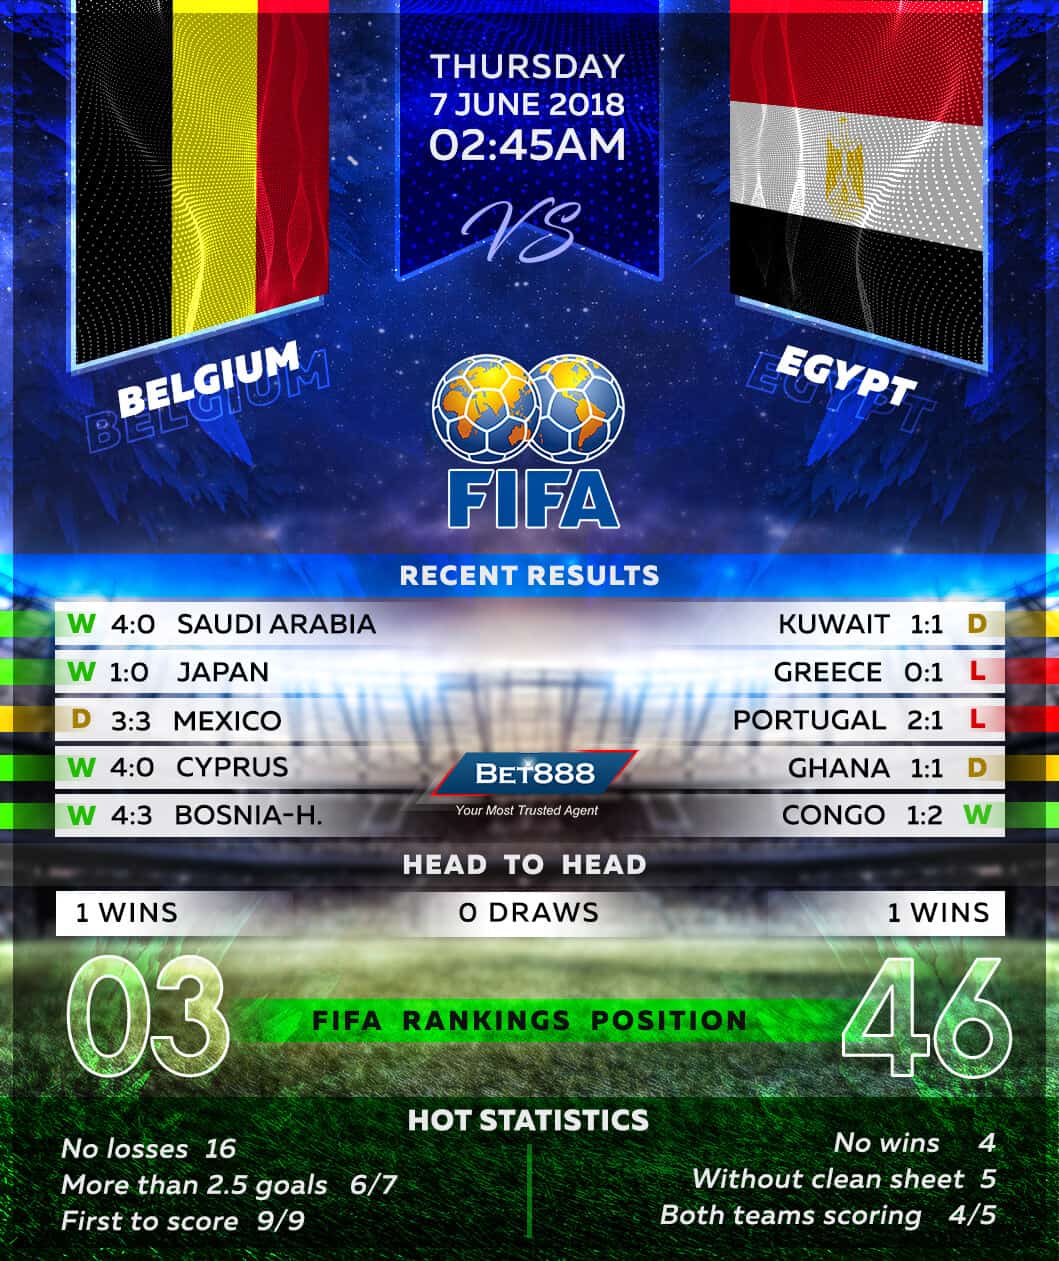 Belgium vs Egypt 07/06/18